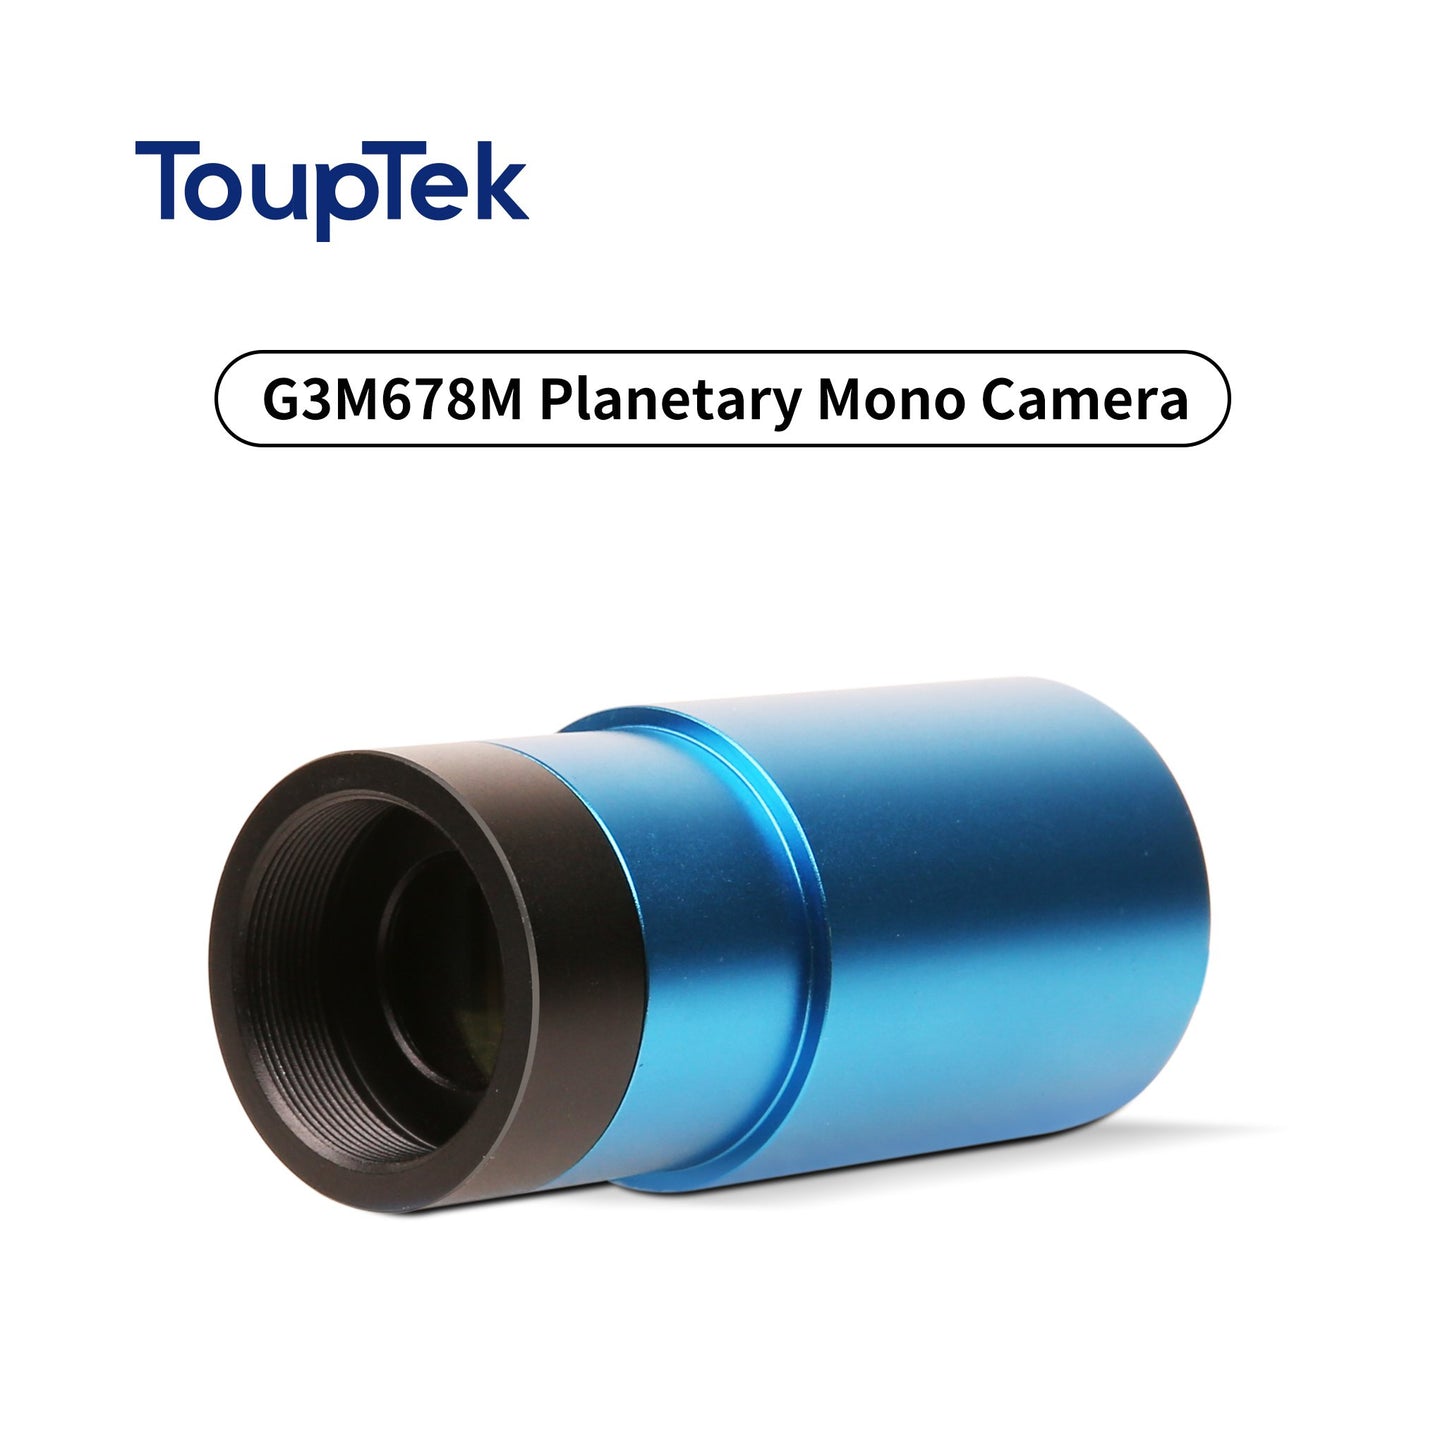 G3M678M Planetary Mono Camera